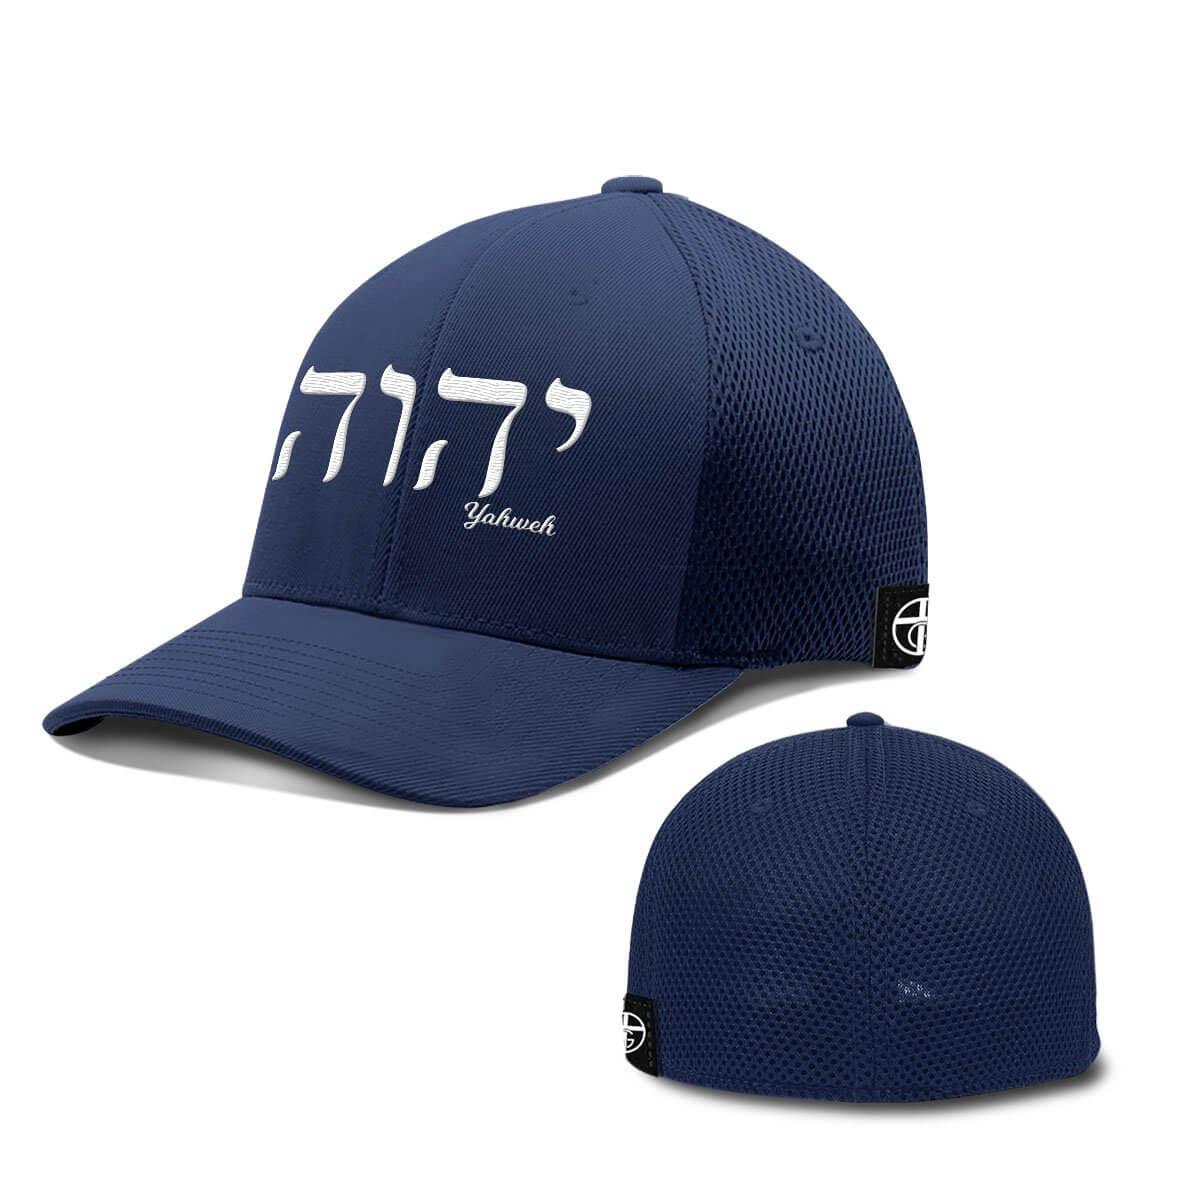 Yhvh Hebrew Name of God Flat Brim Baseball Cap Men's and Women's Adjustable  Hat Black